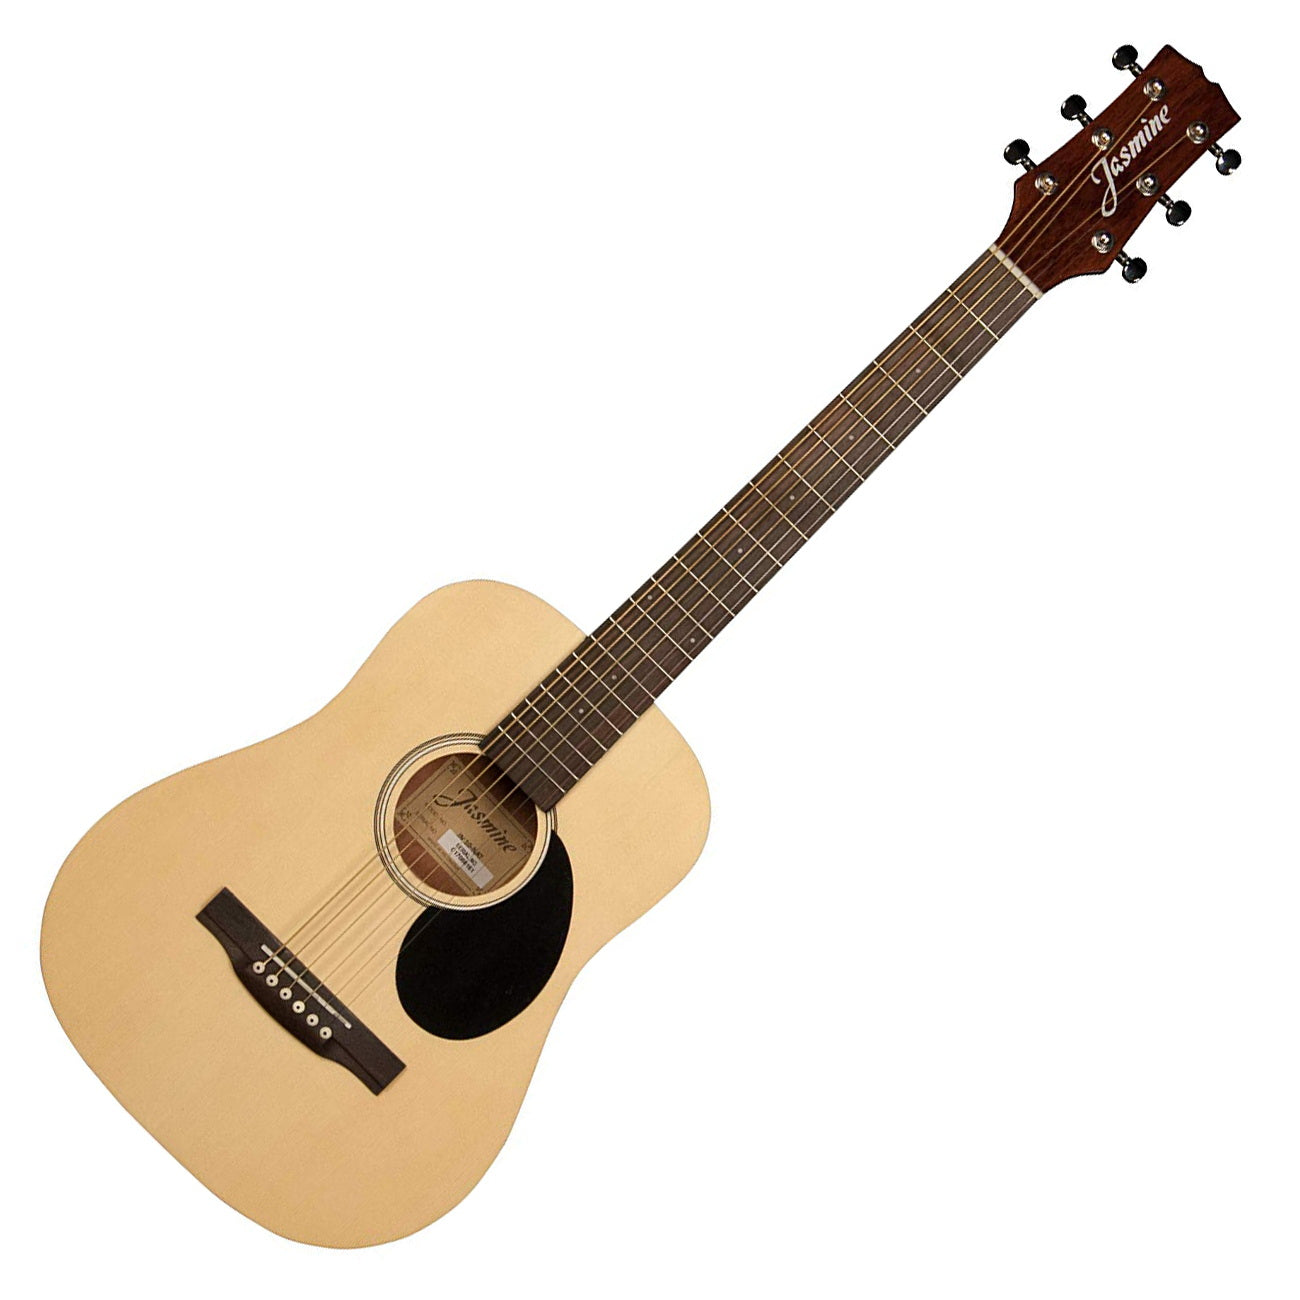 Jasmine JM-10 Travel size acoustic guitar